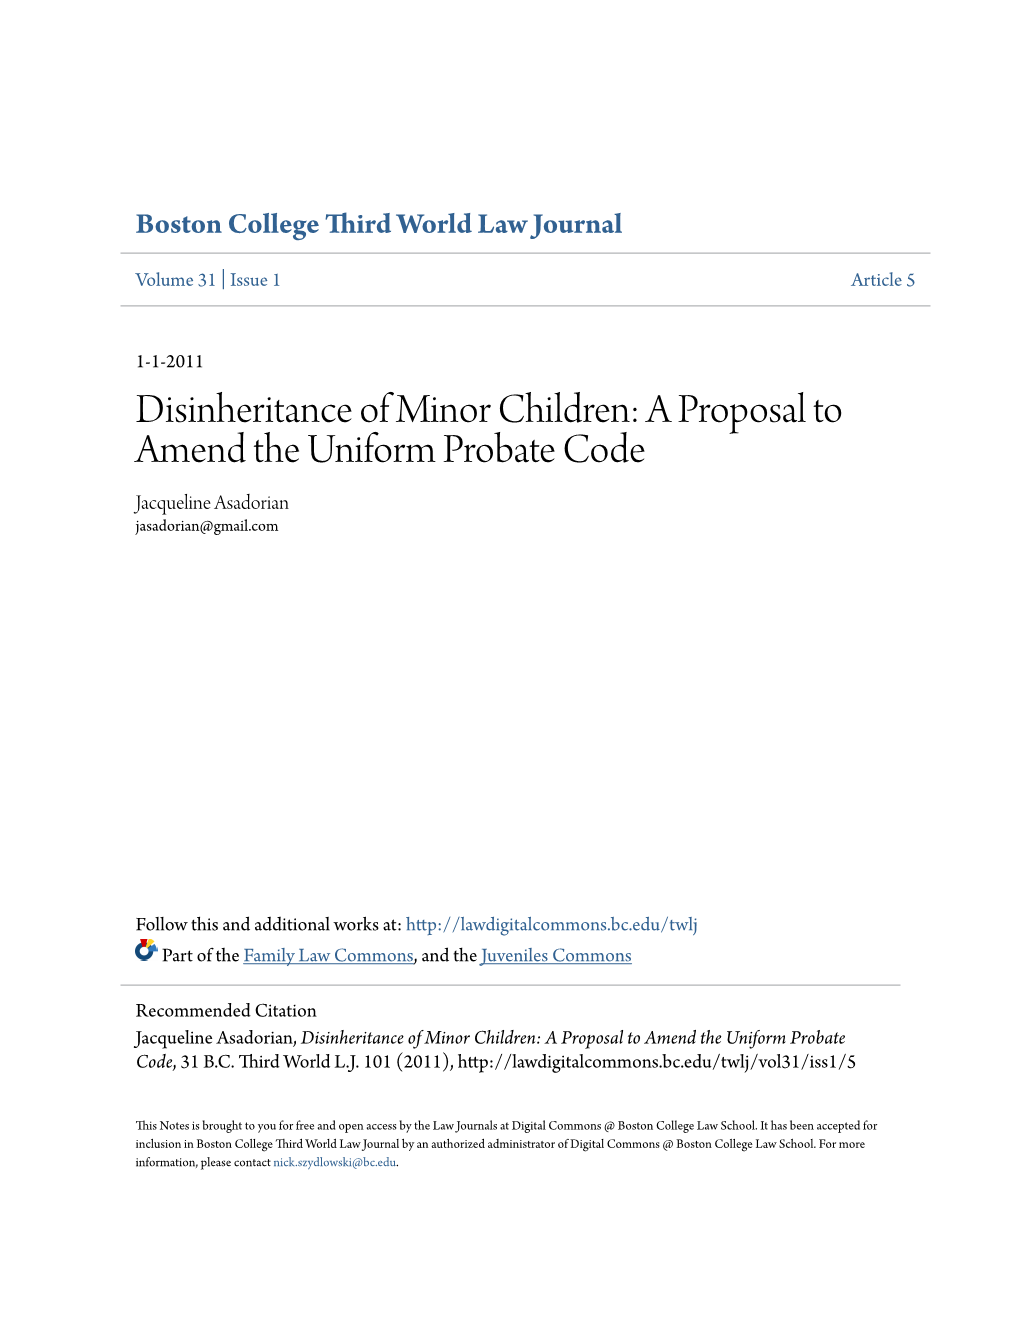 Disinheritance of Minor Children: a Proposal to Amend the Uniform Probate Code Jacqueline Asadorian Jasadorian@Gmail.Com